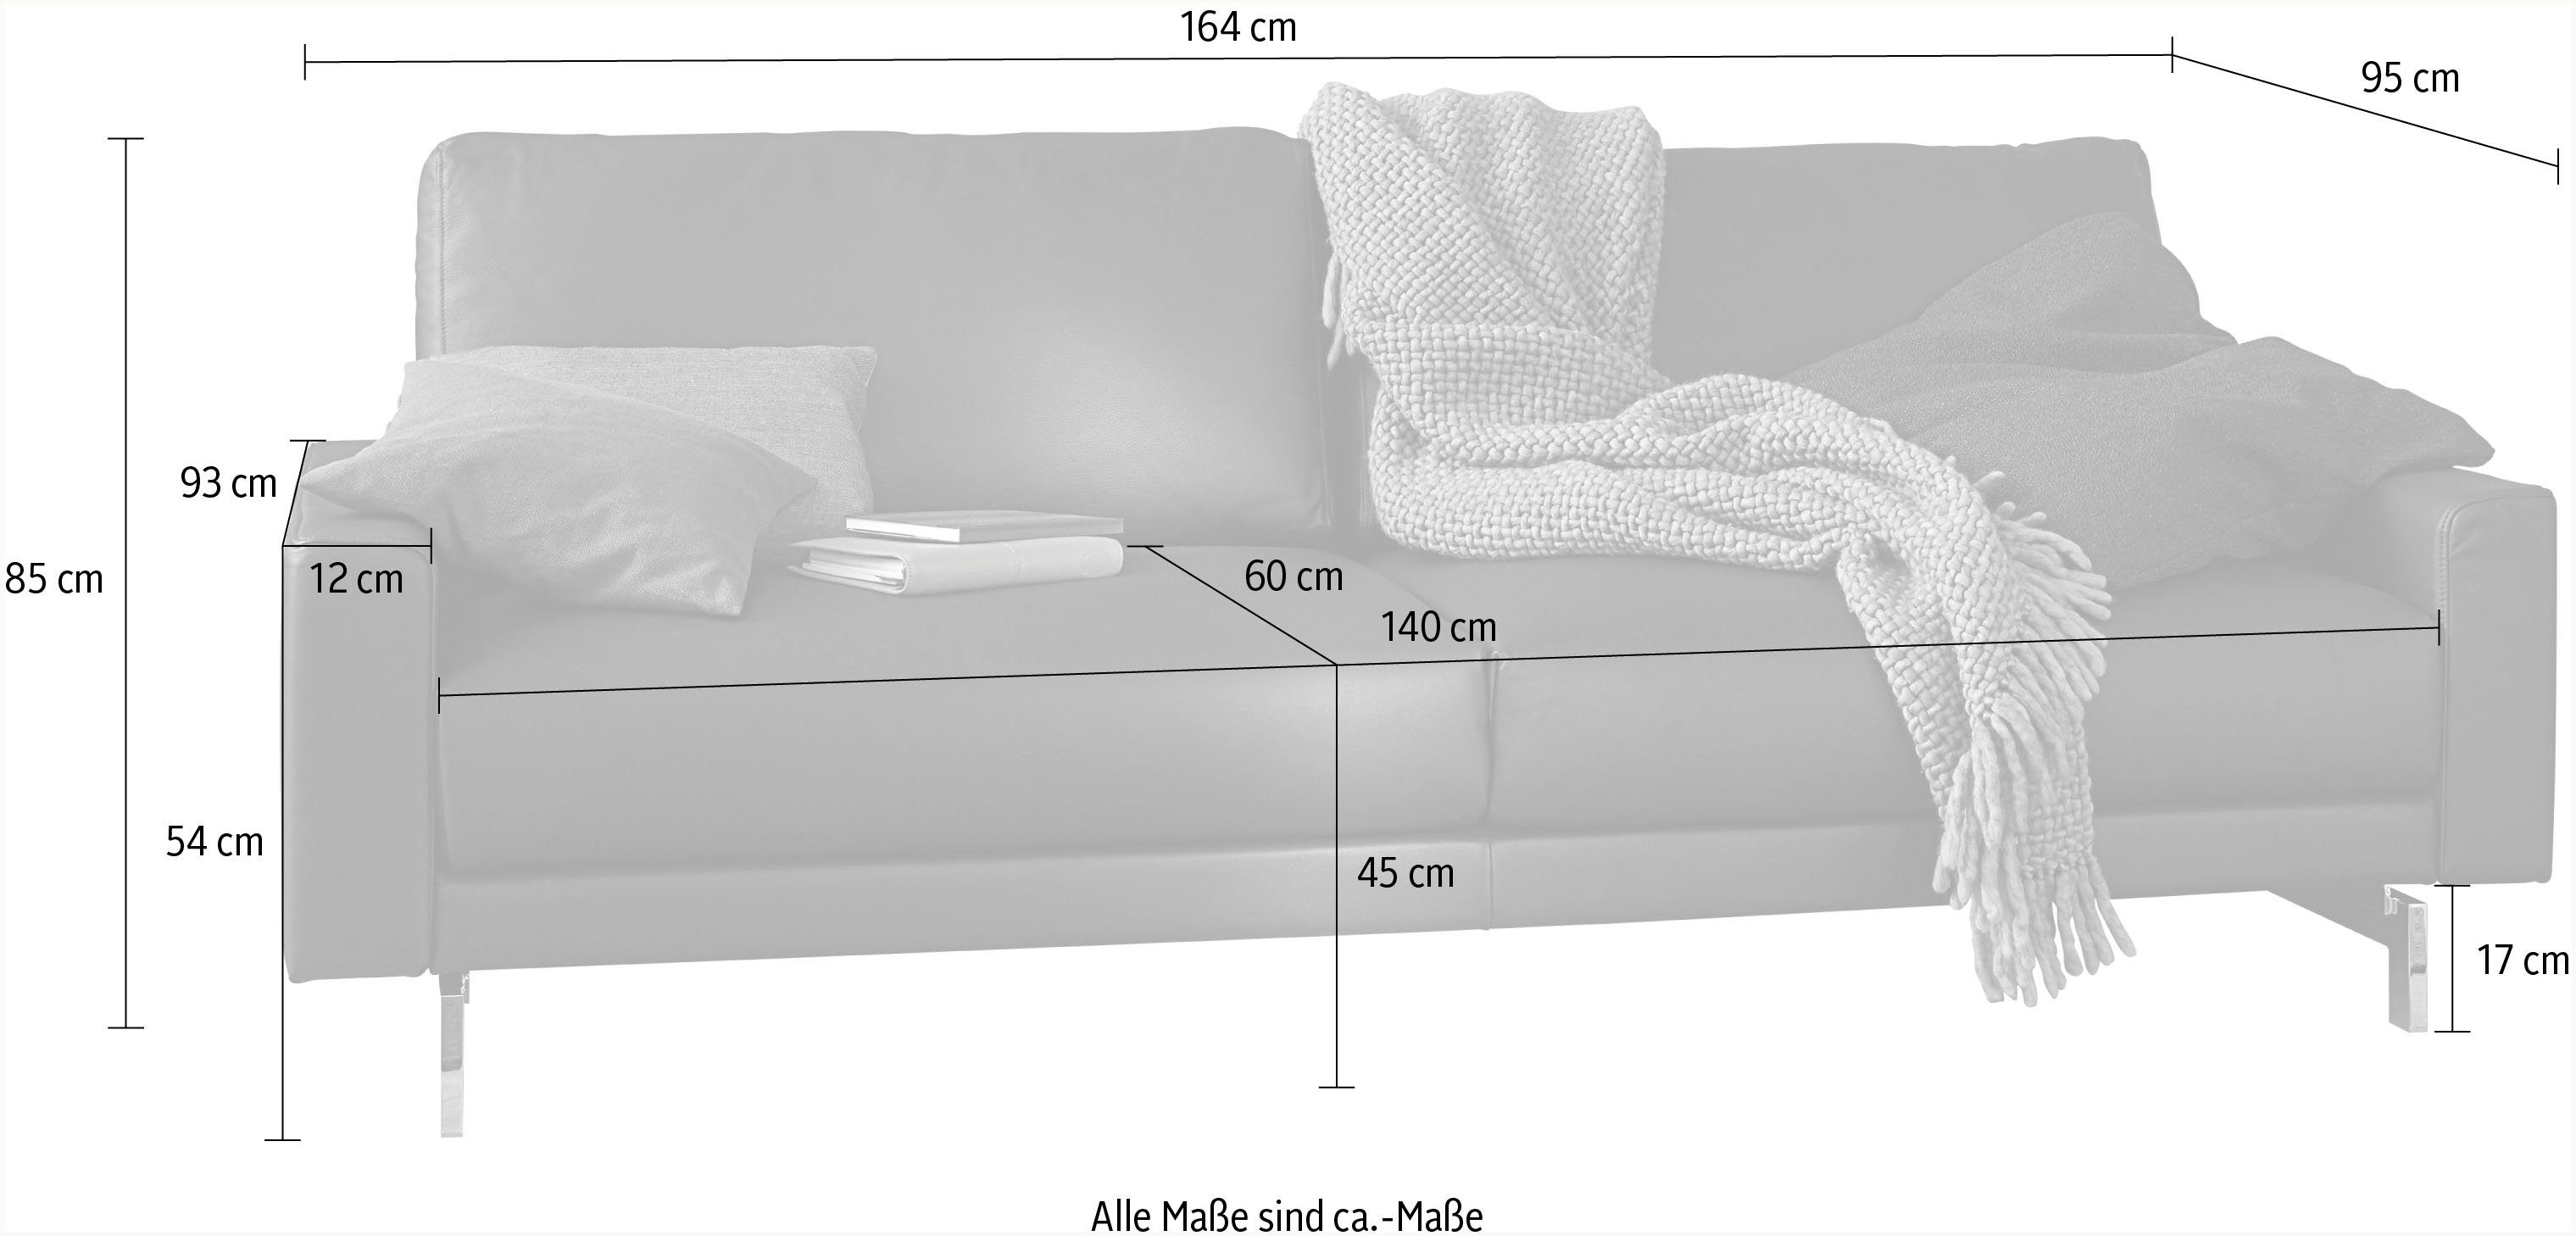 hülsta sofa 164 cm Armlehne Breite Fuß chromfarben glänzend, 2-Sitzer niedrig, hs.450